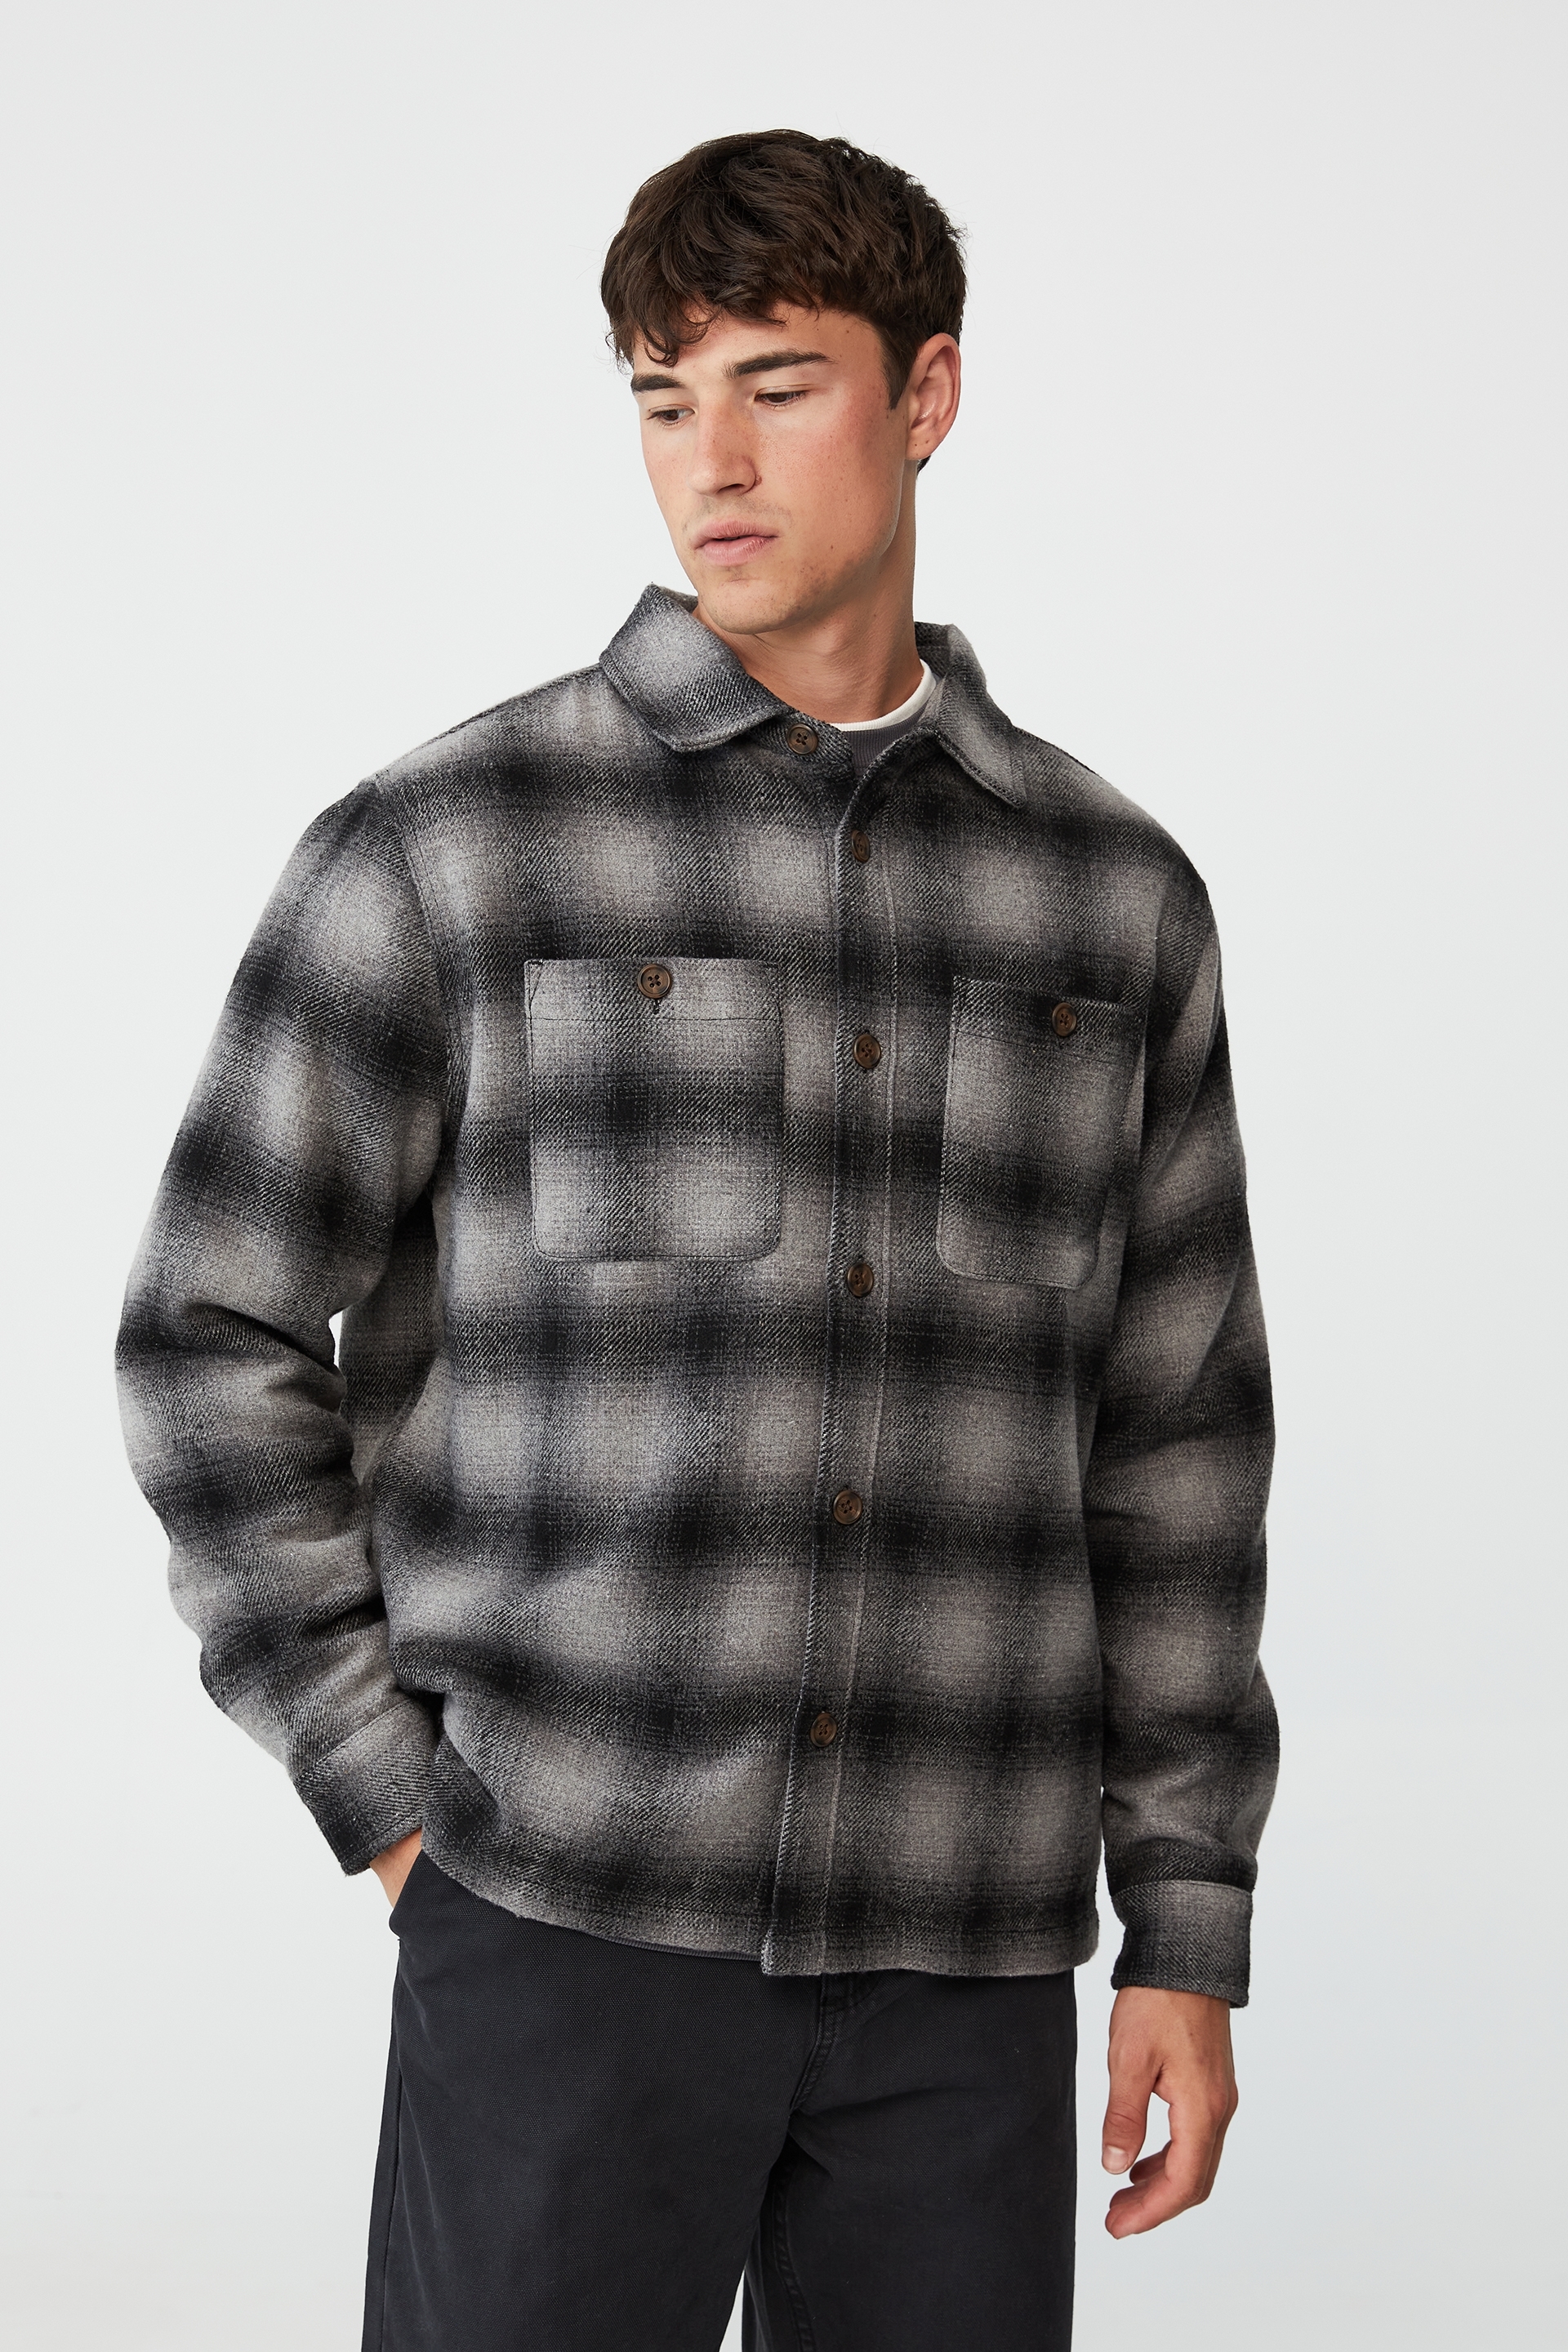 Cotton On Men - Heavy Overshirt - Black grey check